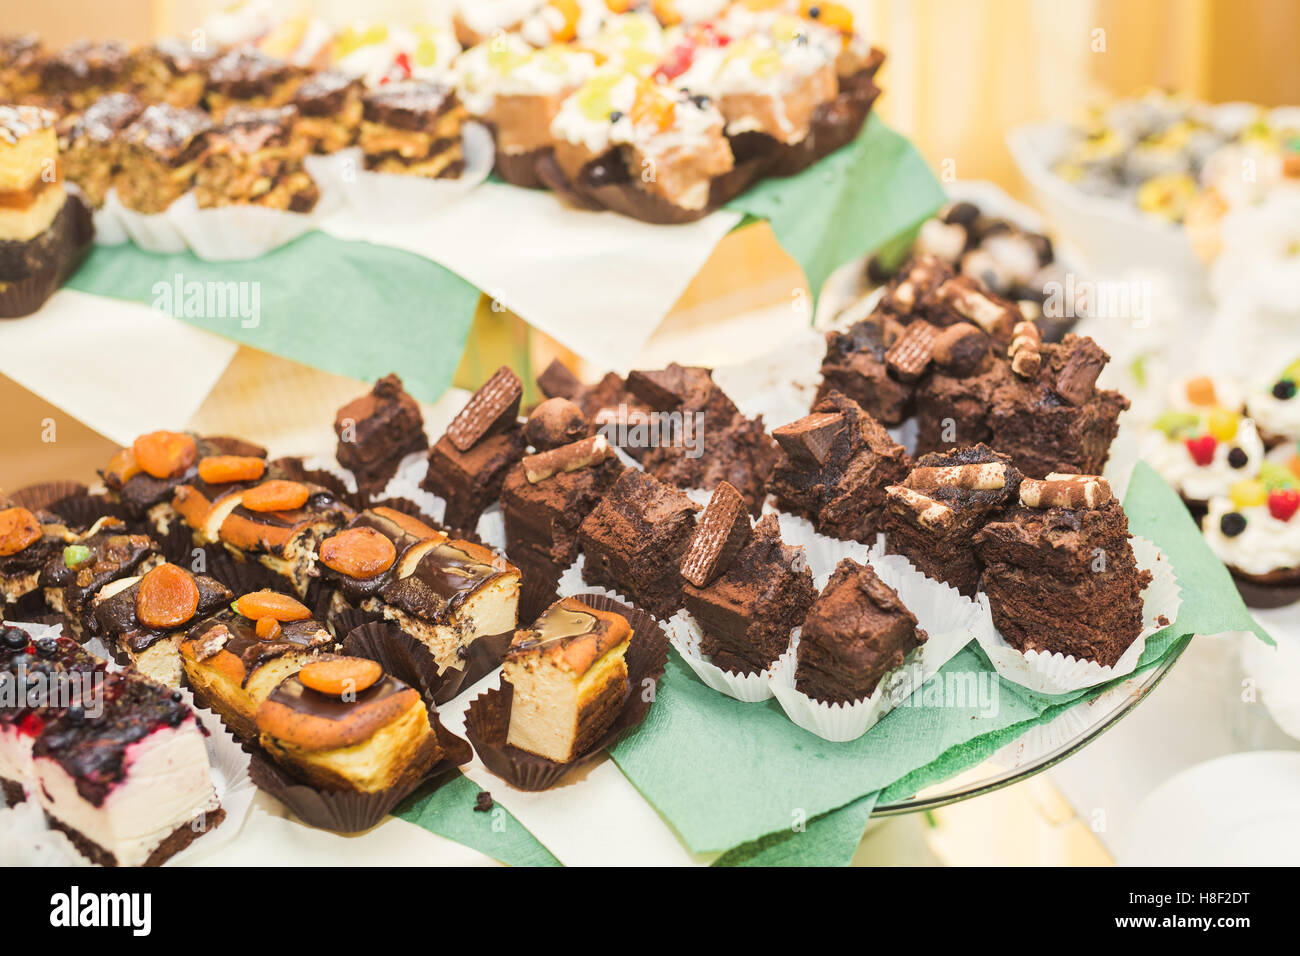 https://c8.alamy.com/comp/H8F2DT/delicious-wedding-reception-candy-bar-dessert-table-H8F2DT.jpg